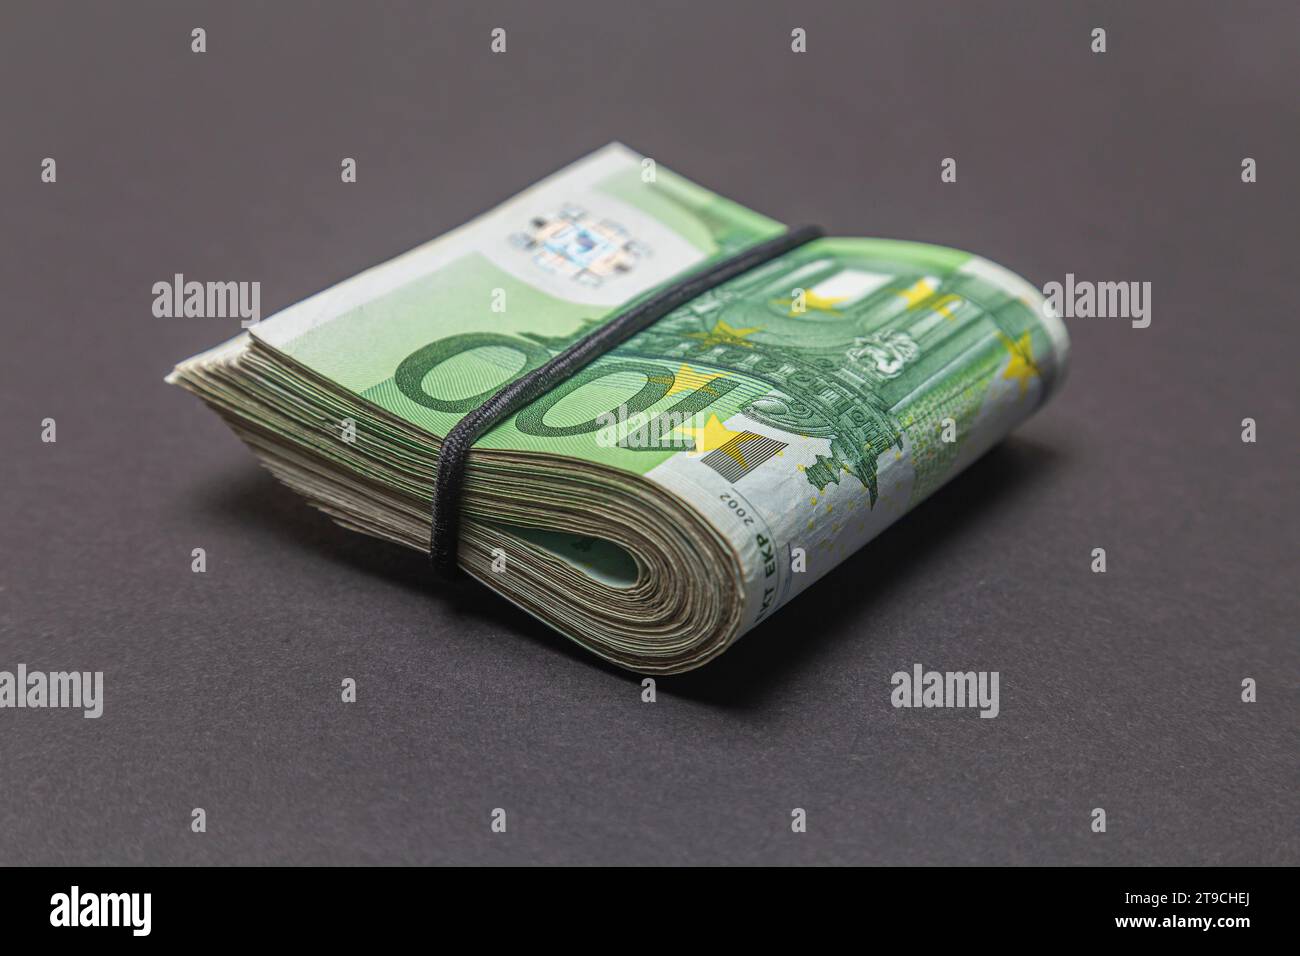 Euro banknotes foldedin half on a black background. Stock Photo